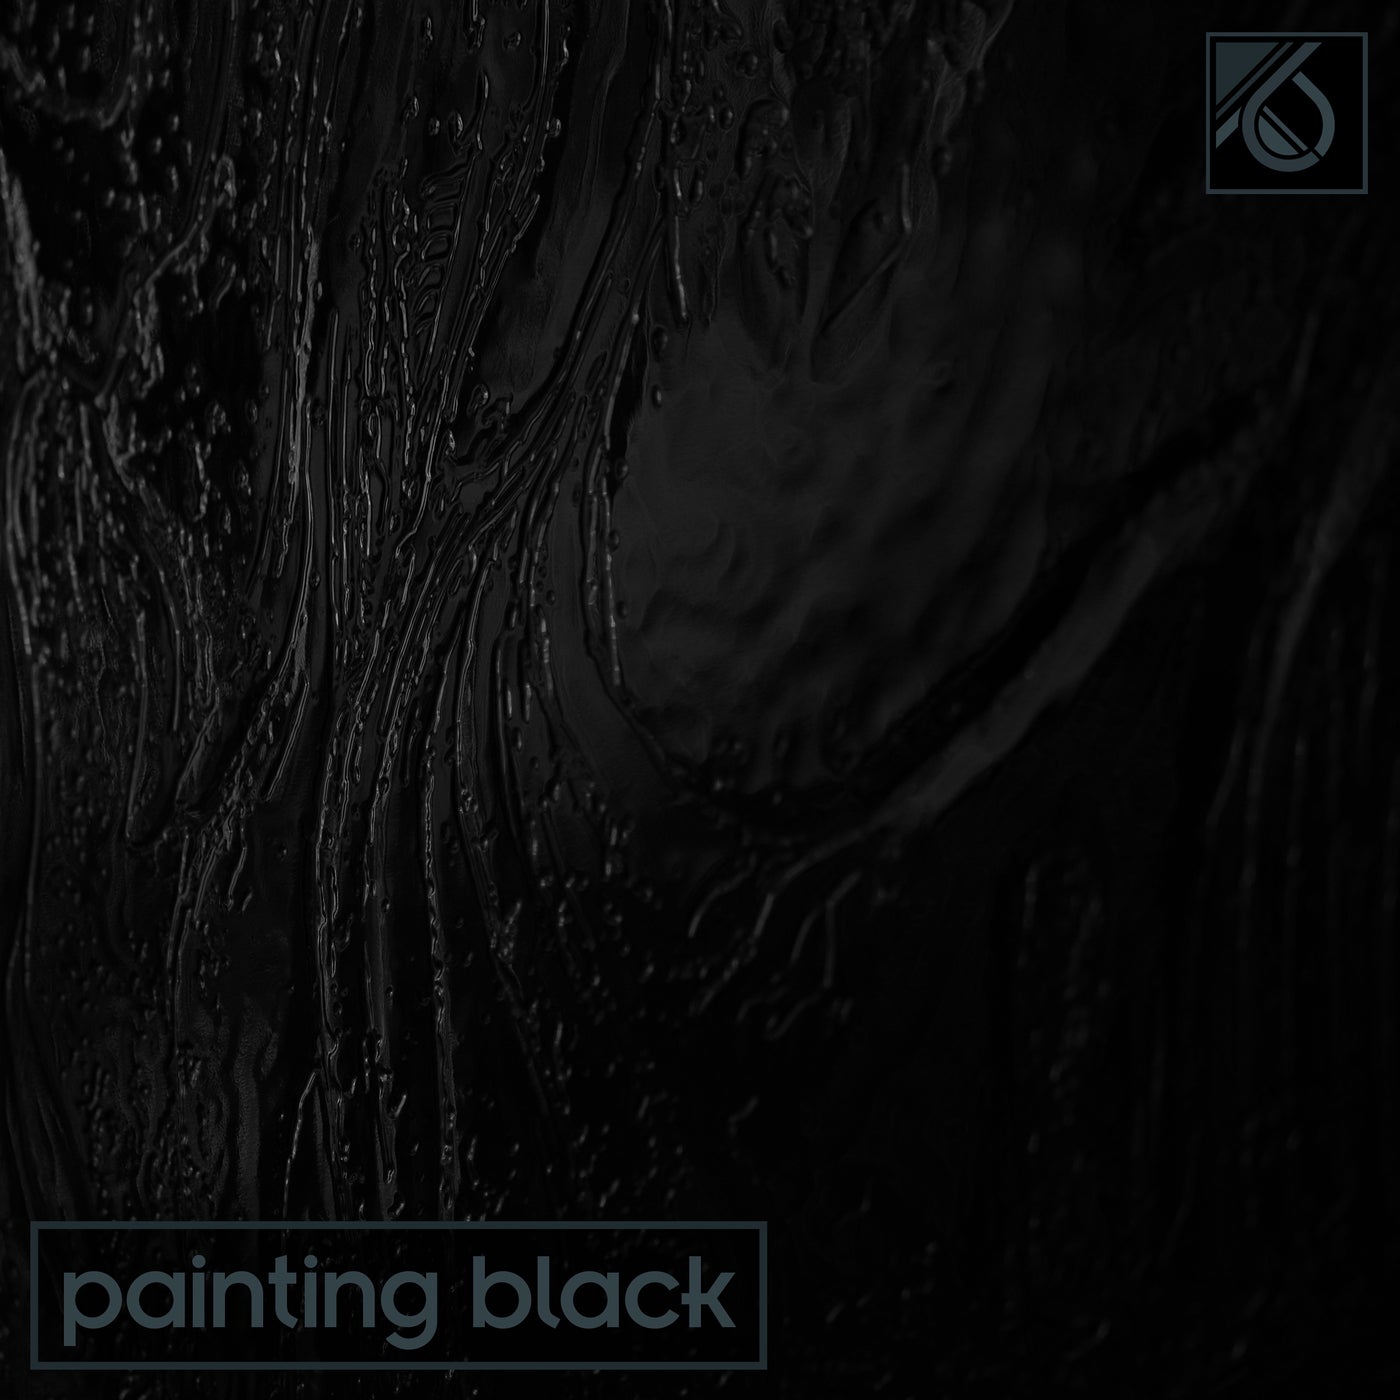 Painting Black, Vol. 1